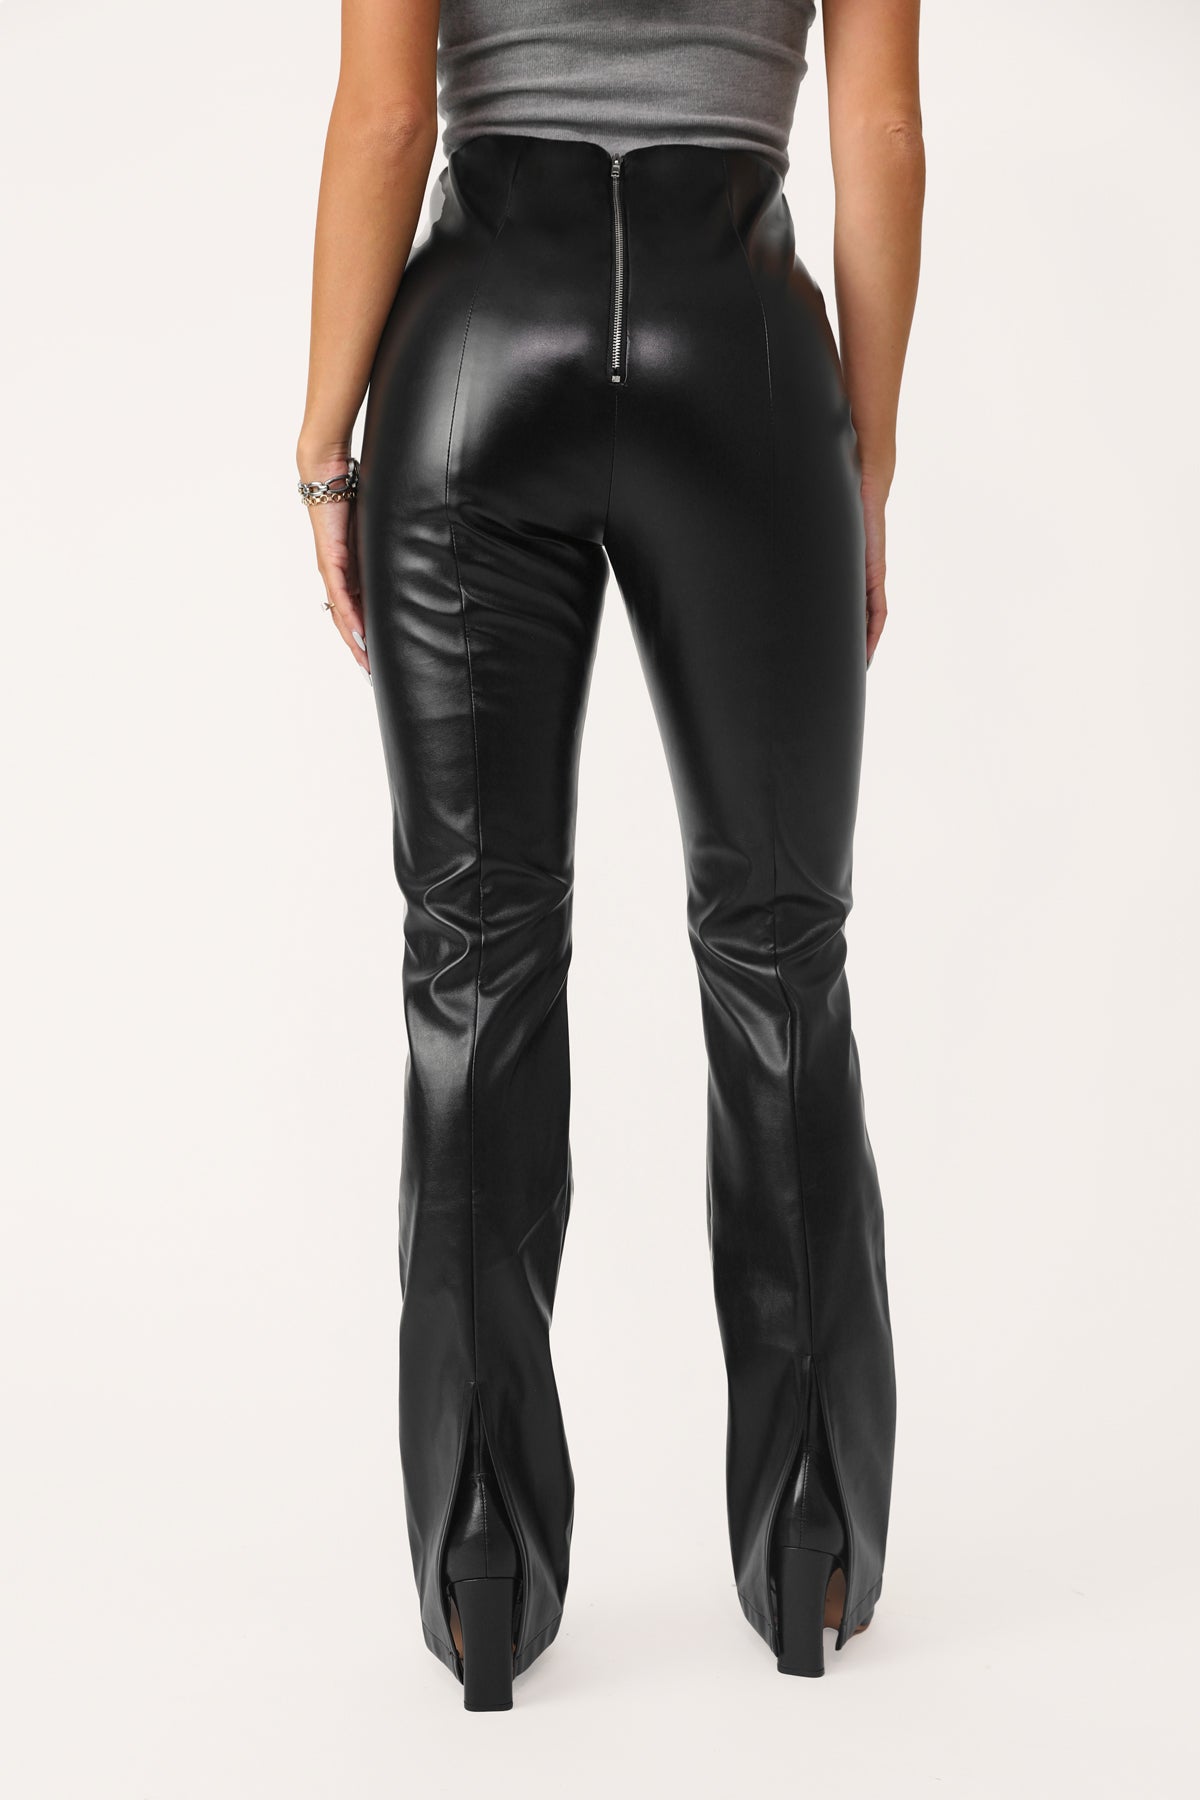 Make It Spicy Faux Leather Jumpsuit - Black